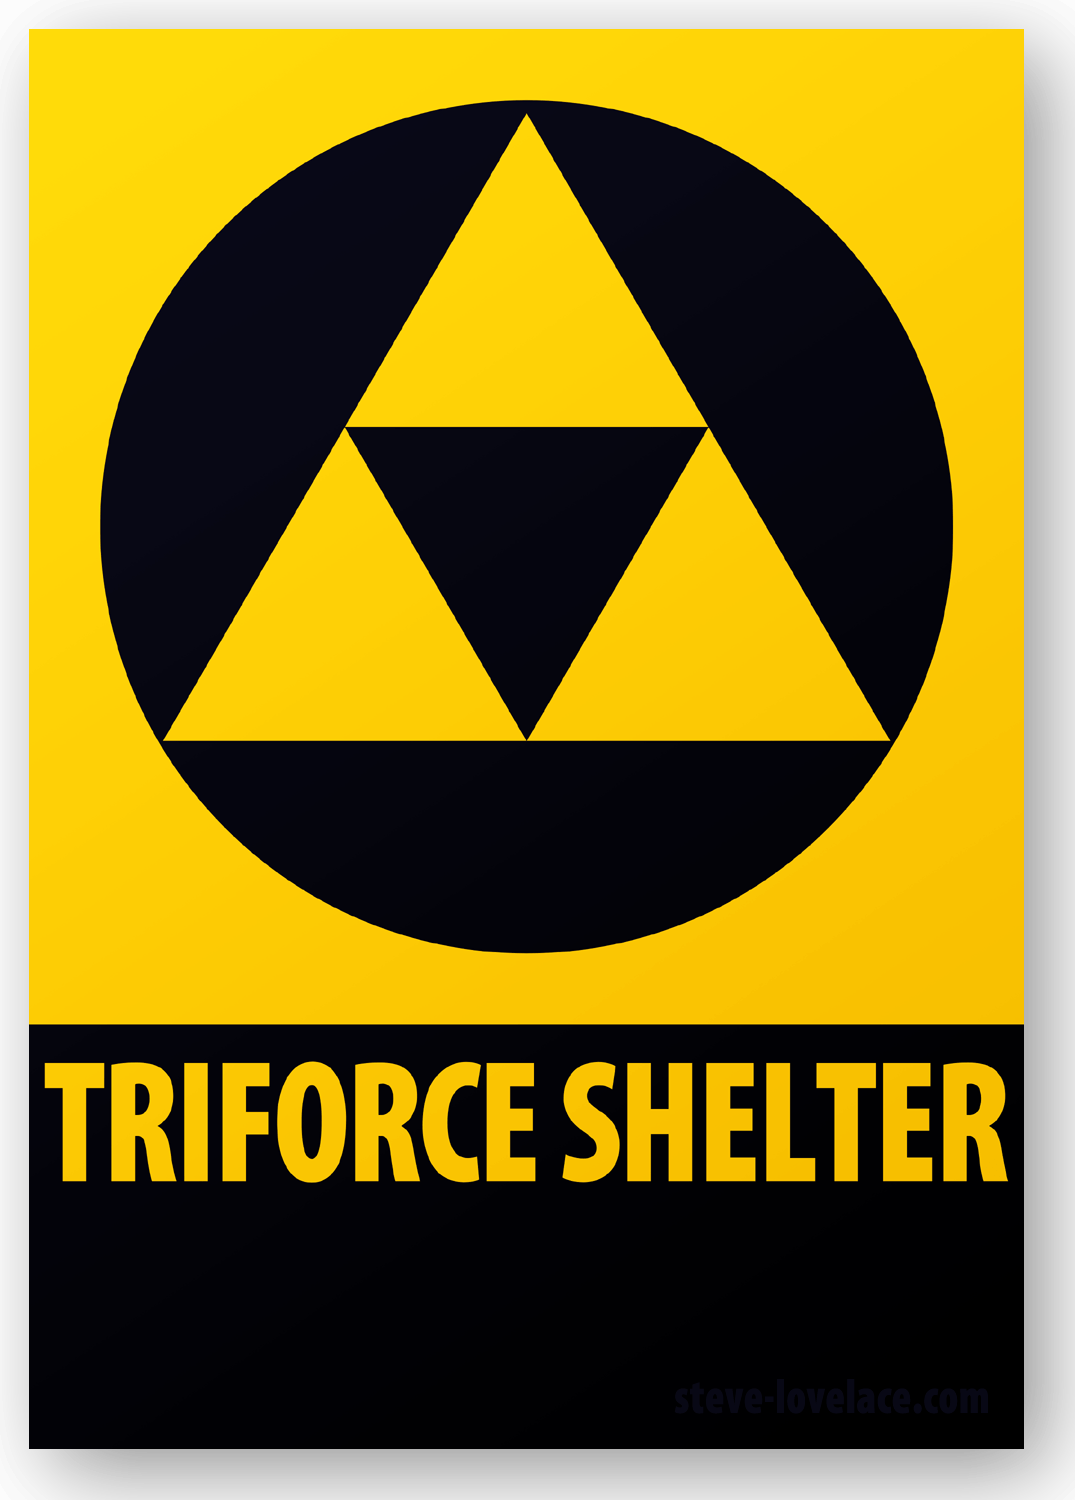 Bomb Shelter Logo - The Fallout Shelter Sign